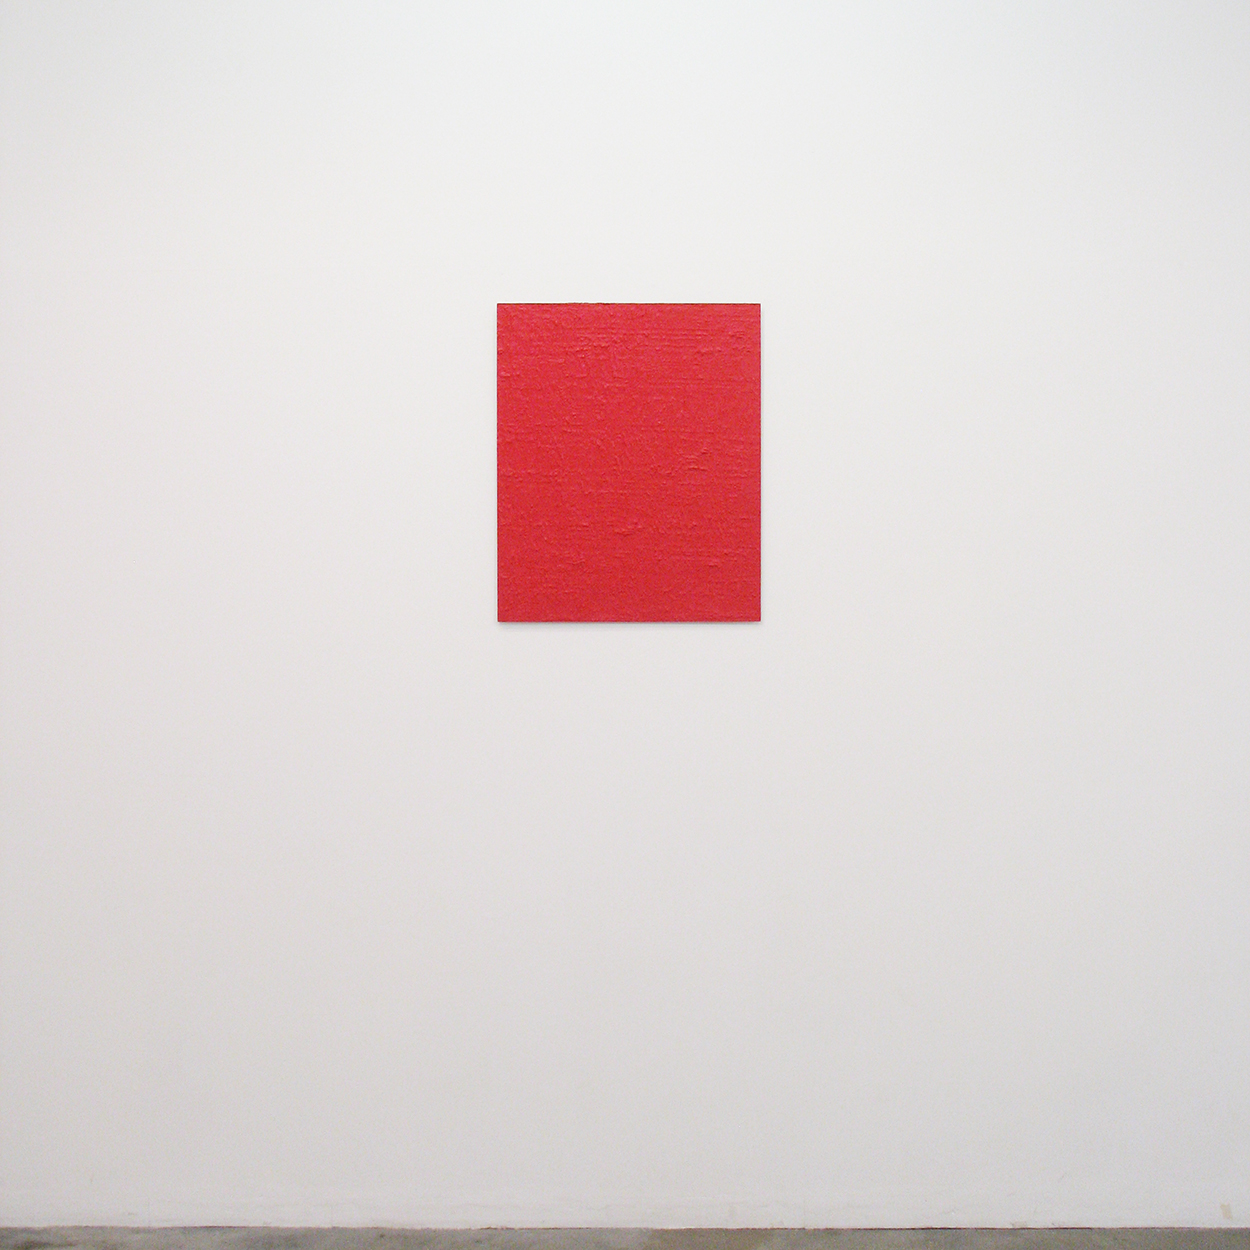 Untitled-Red｜Oil on aluminum｜Oil on aluminum｜606 x 500 mm｜2012